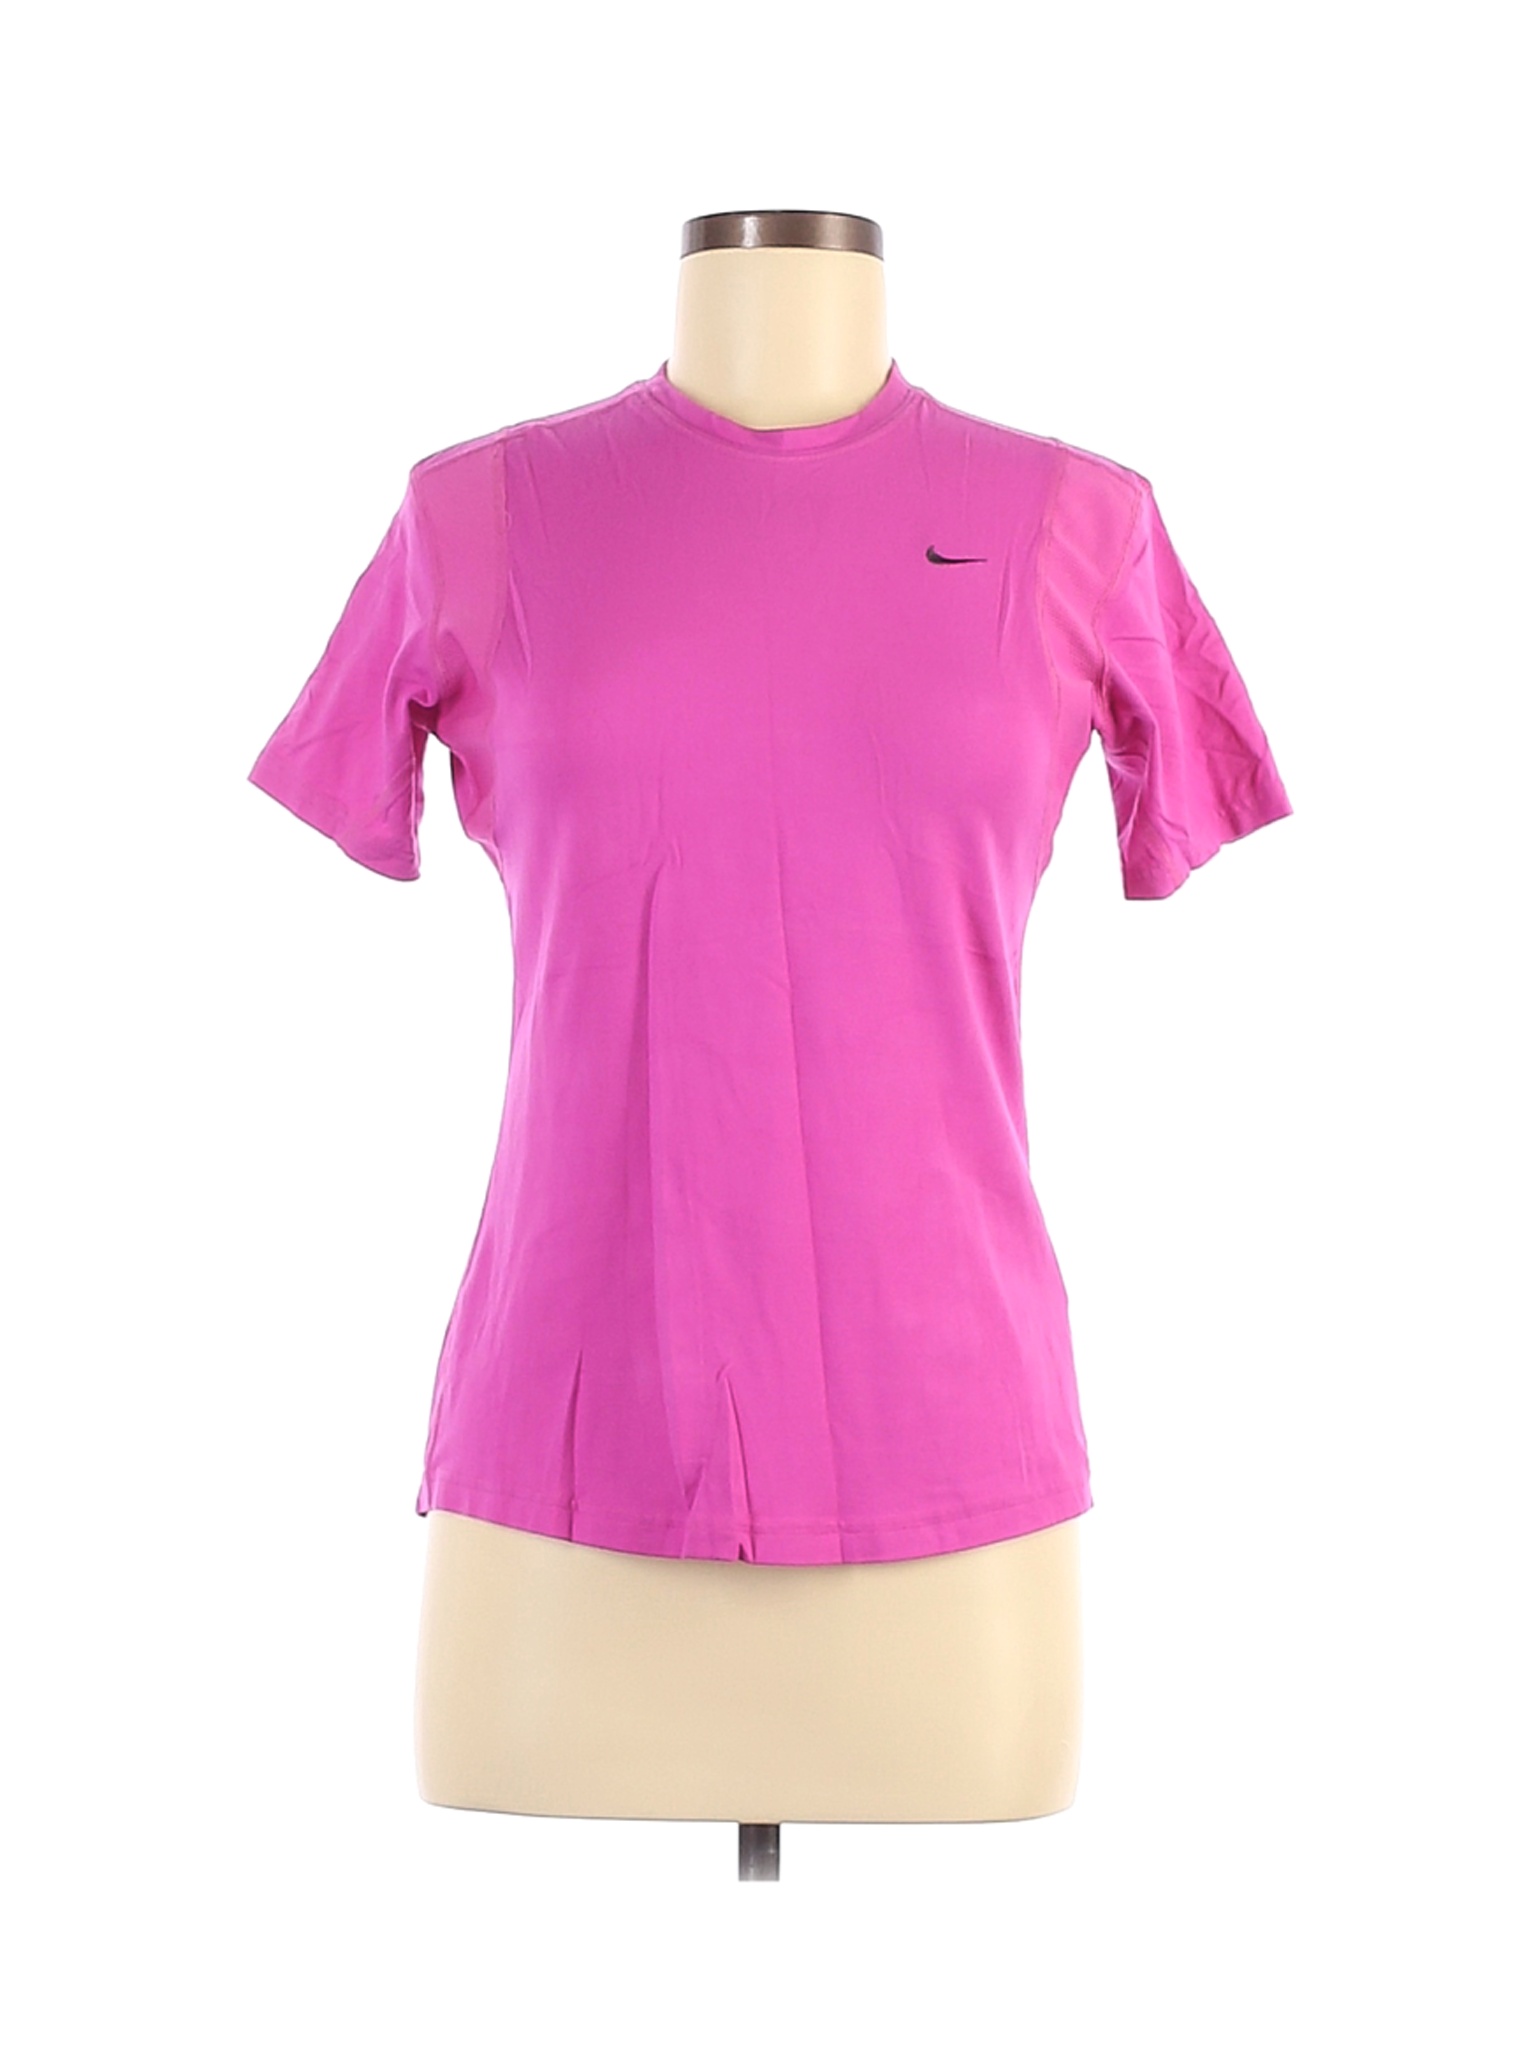 Nike Women Pink Active T-Shirt M | eBay